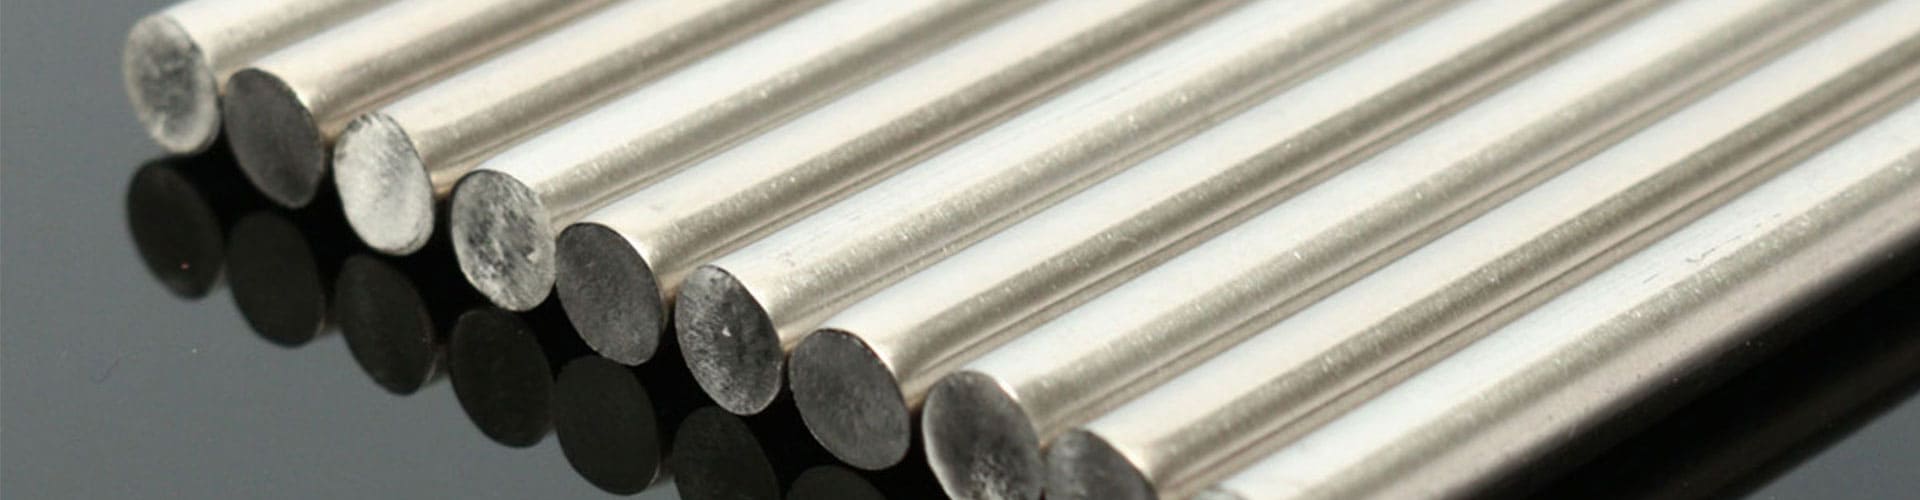 nickel-alloy-201-round-bars-rods-manufacturer-exporter-supplier-in-israel